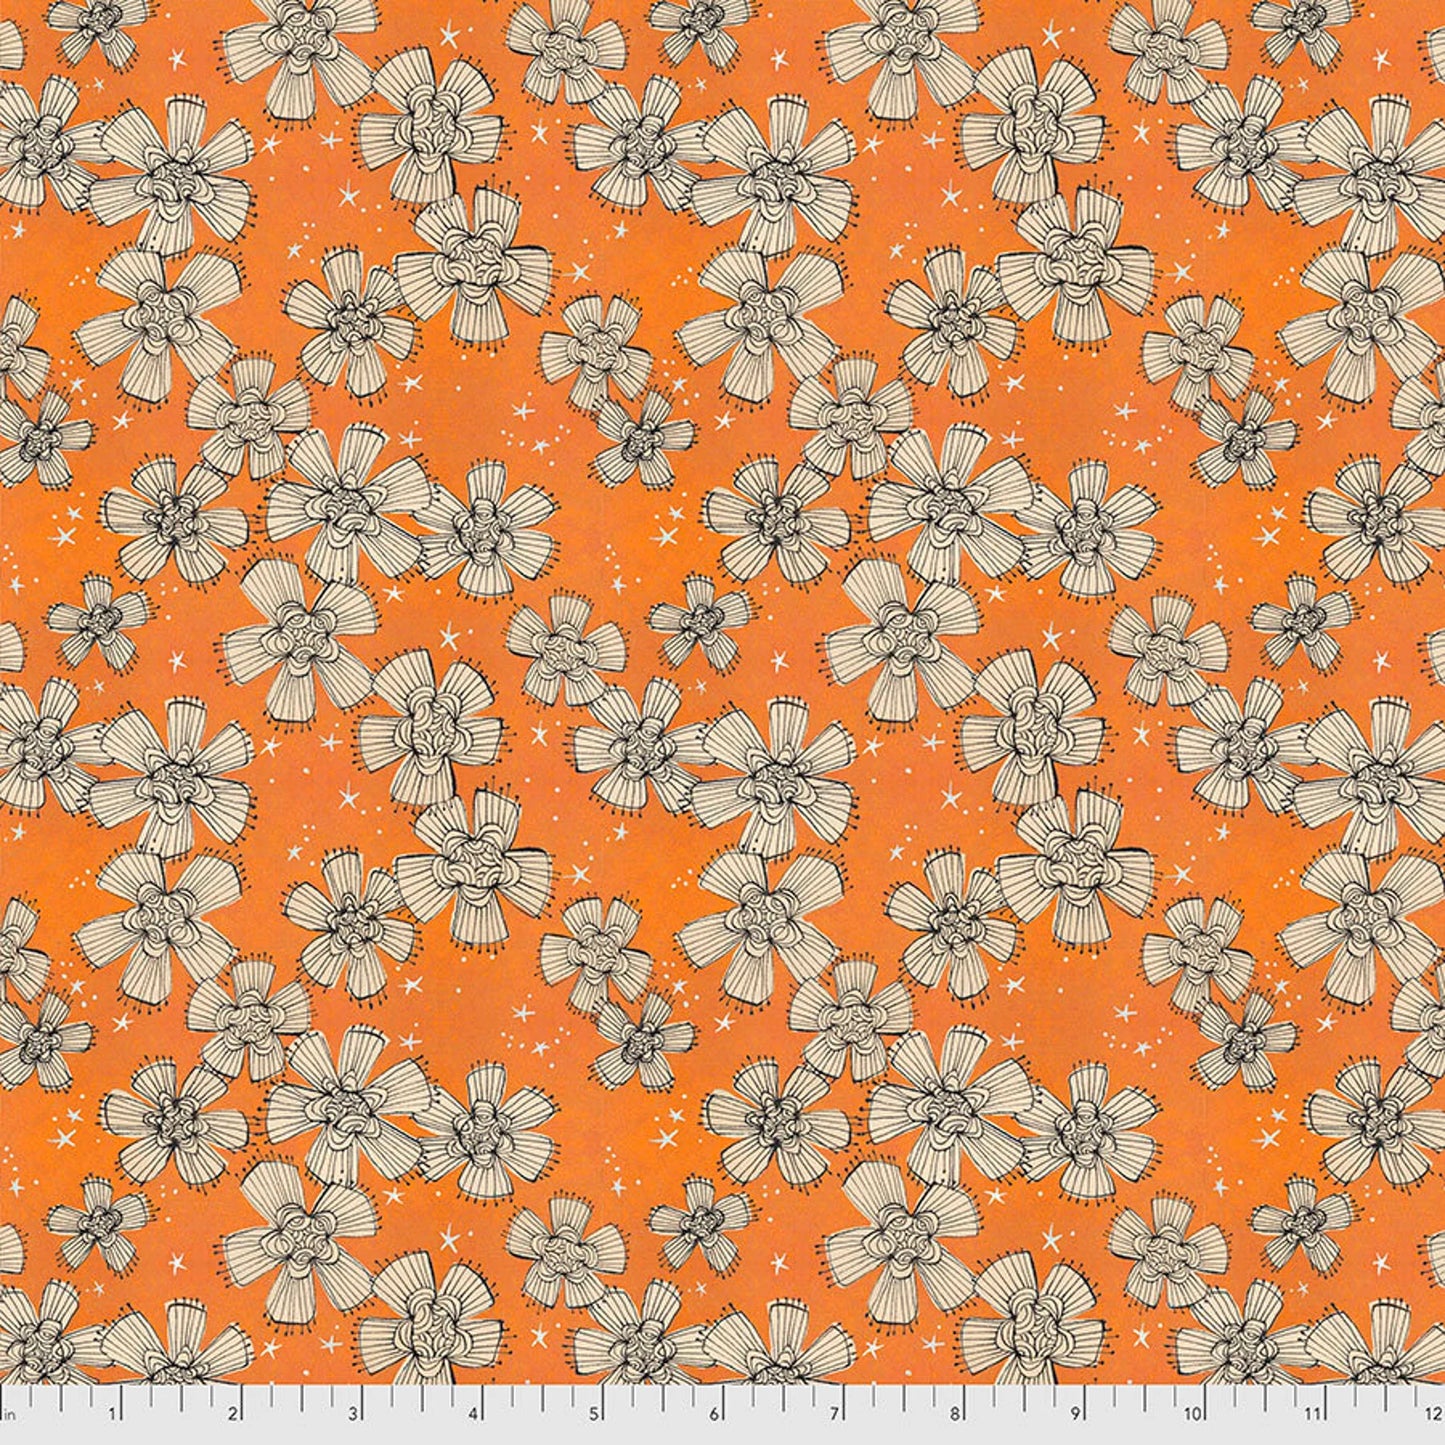 Free Spirit Fabric - Nocturnal Bloom Orange - PWCD004.XORANGE - Cori Dantini - Floral - Halloween - Cotton Fabric